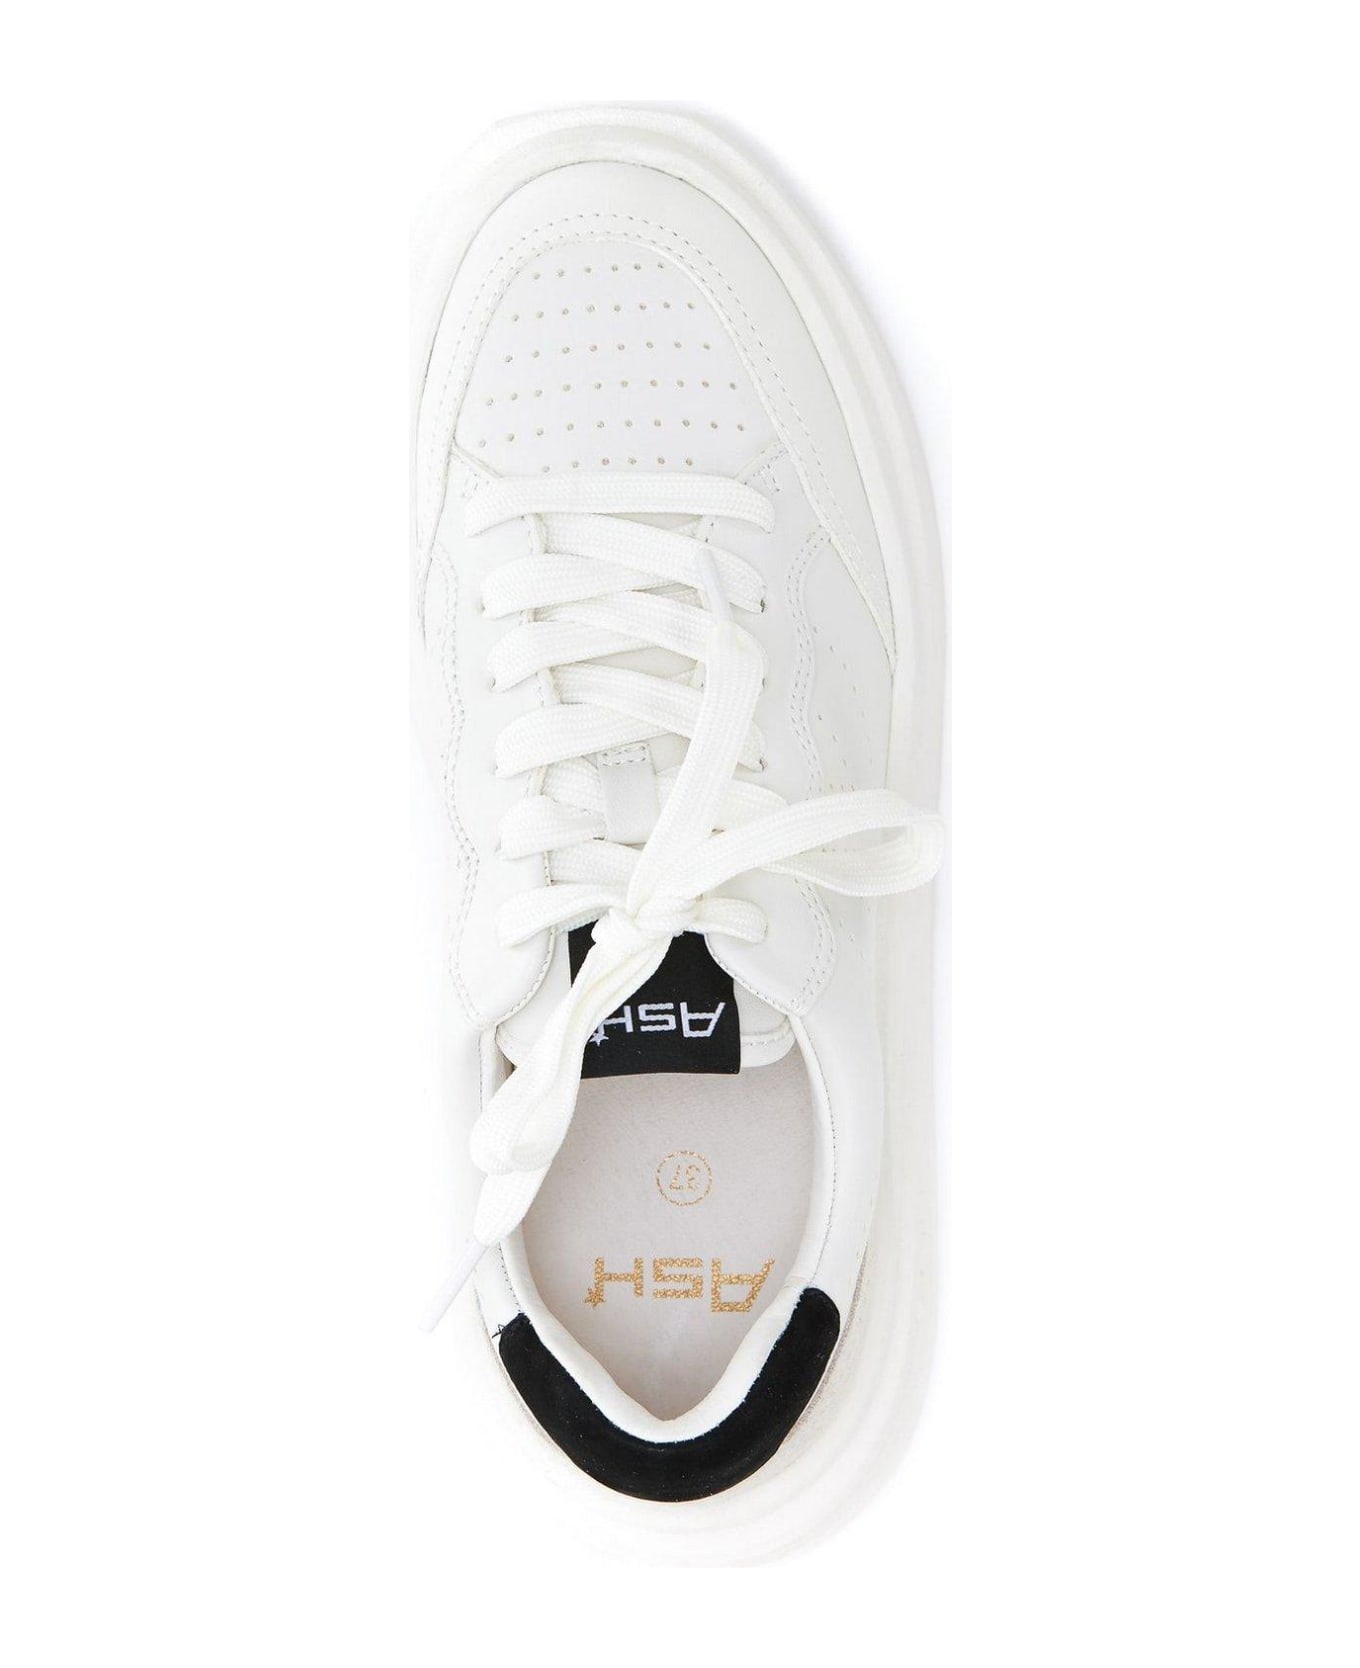 Ash Impuls Low-top Platform Sneakers - White talco black